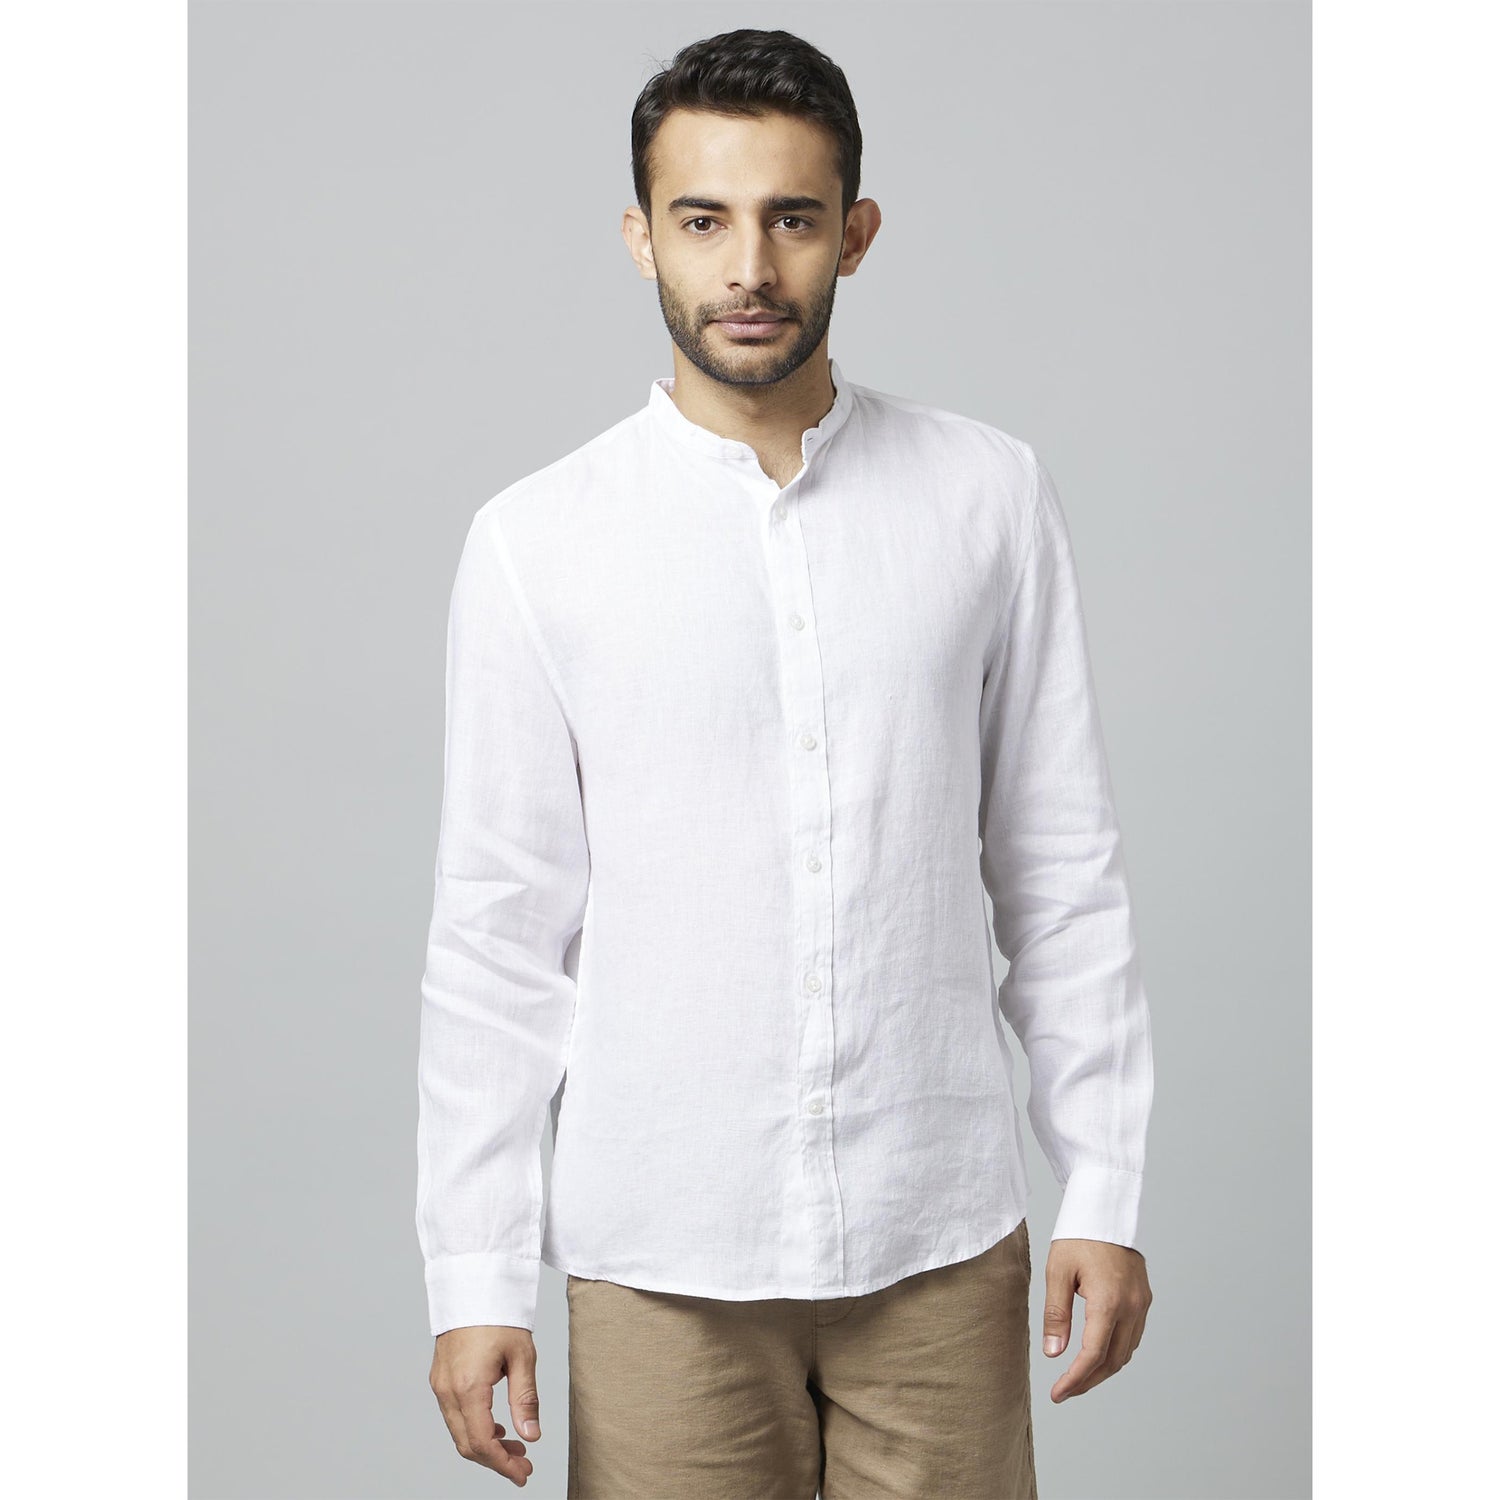 White Classic Mandarin Collar Linen Casual Shirt (DAMAOLIN)